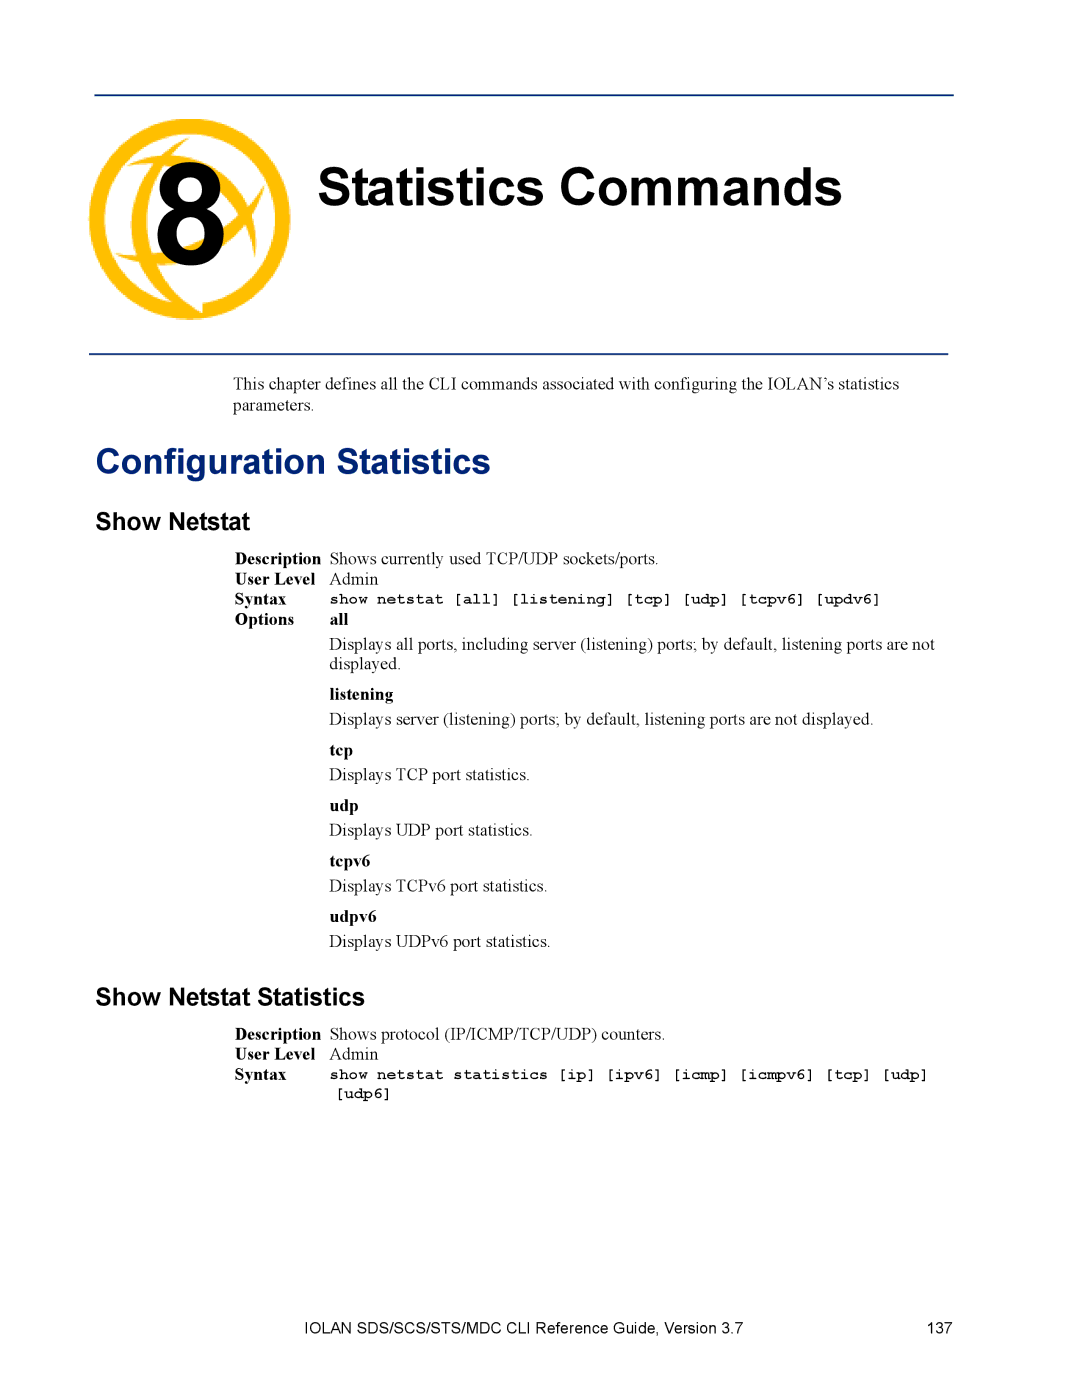 Perle Systems MDC, SDS manual Statistics Commands Chapter, Configuration Statistics, Show Netstat Statistics 